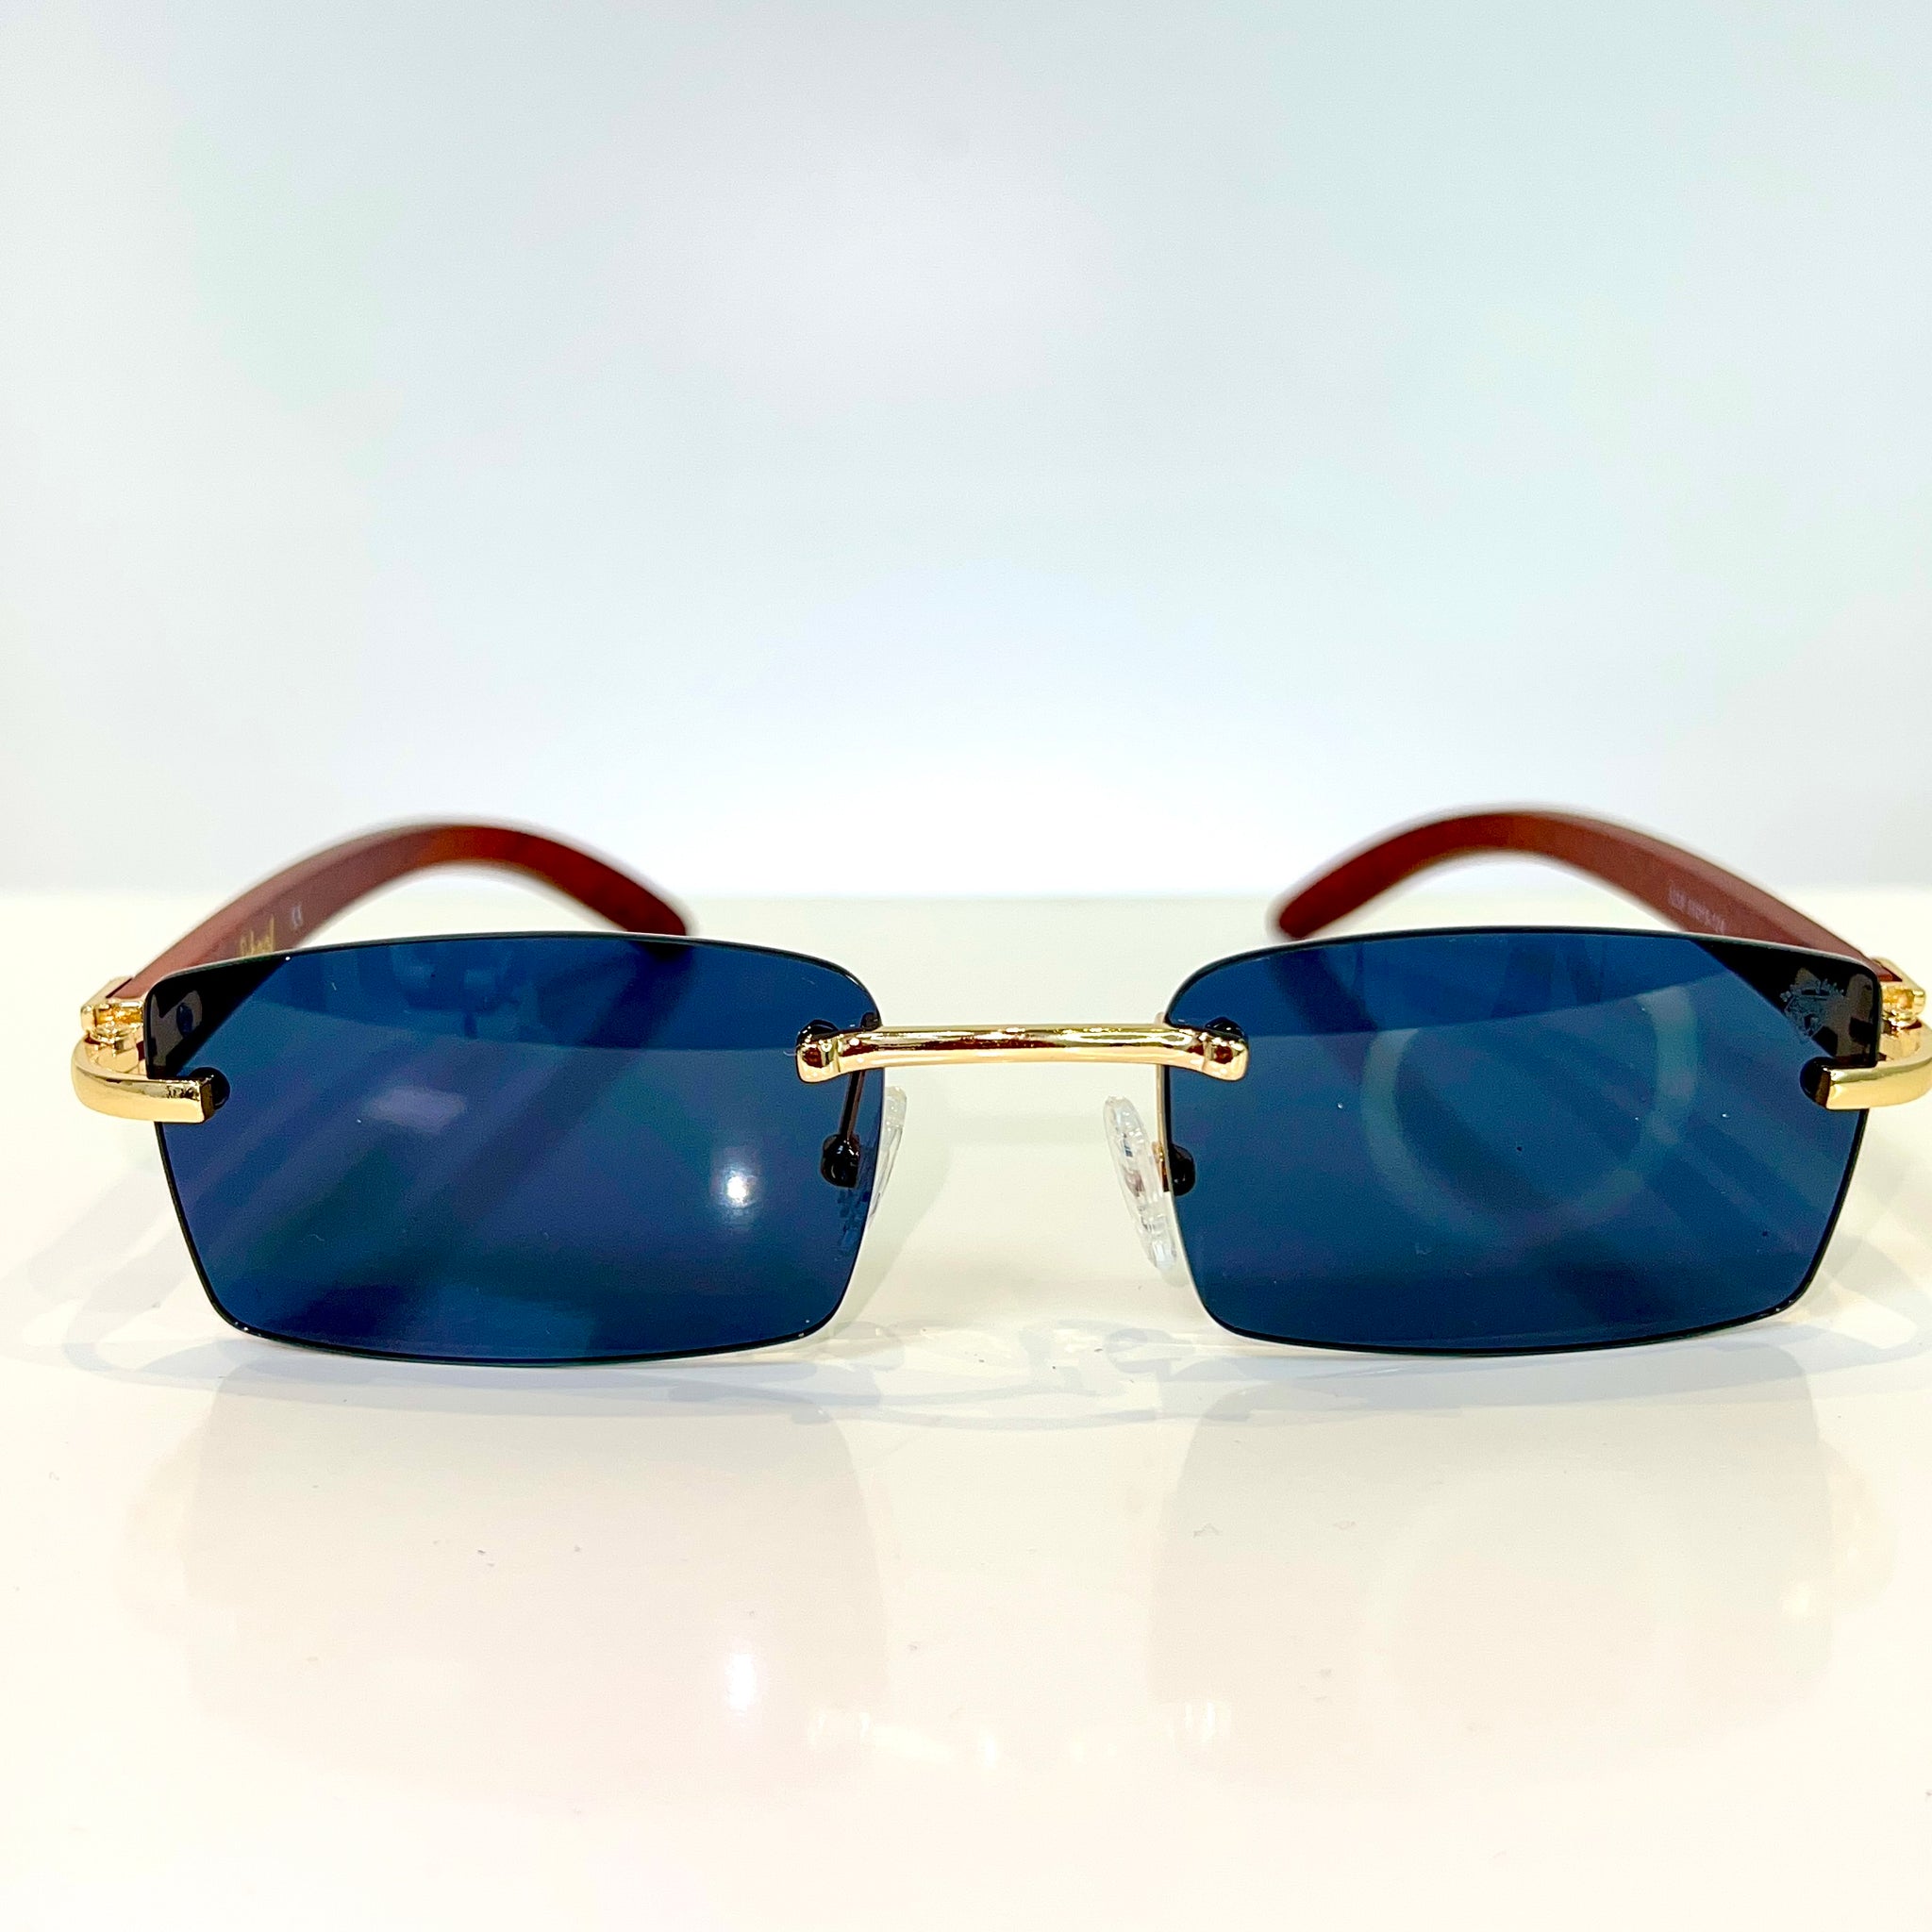 Guerrero Glasses - 14 carat gold plated - Black Shade